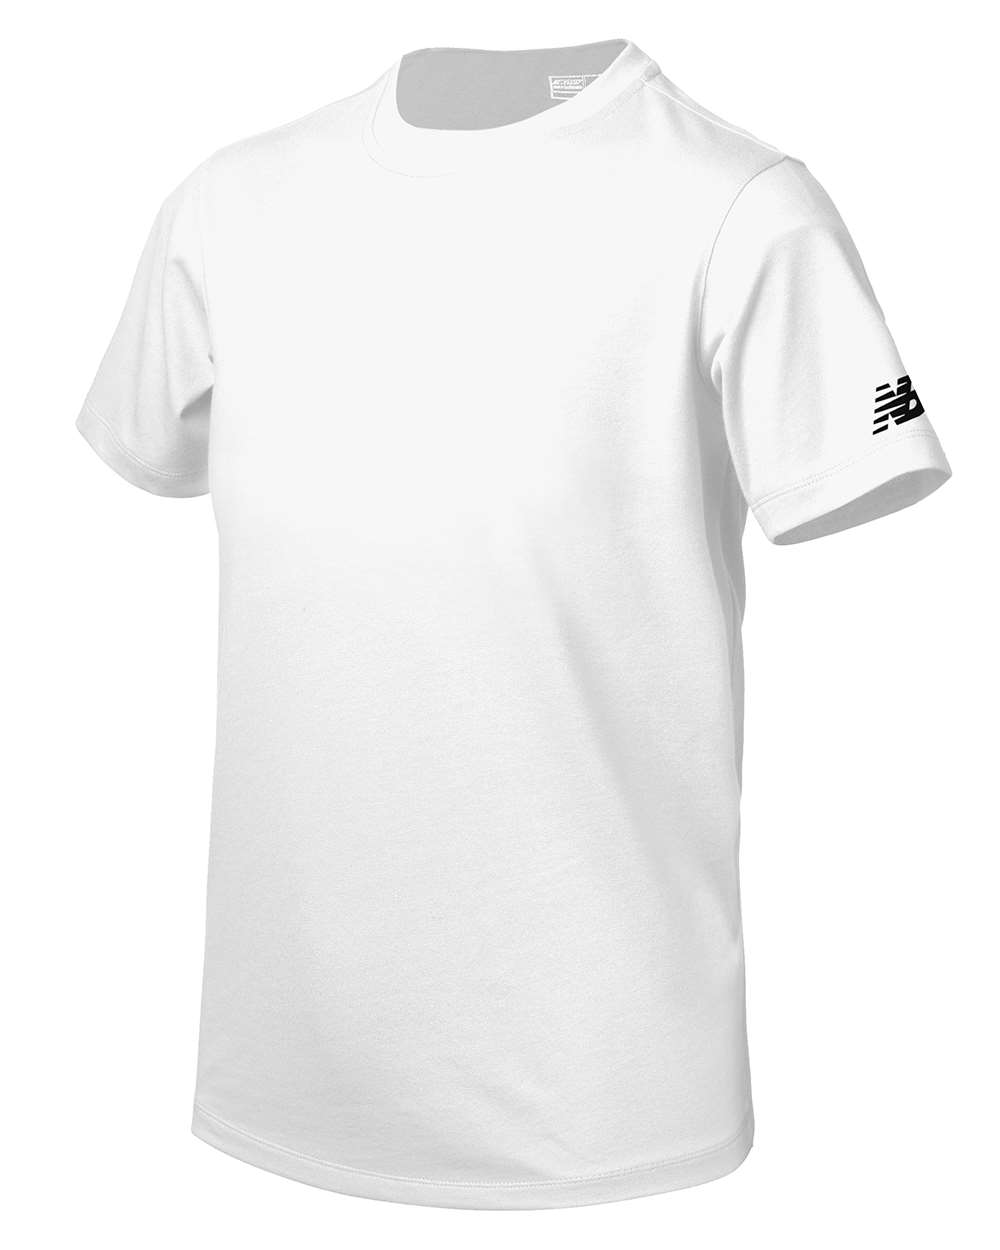 New Balance Youth Performance T-Shirt #YB81004P White